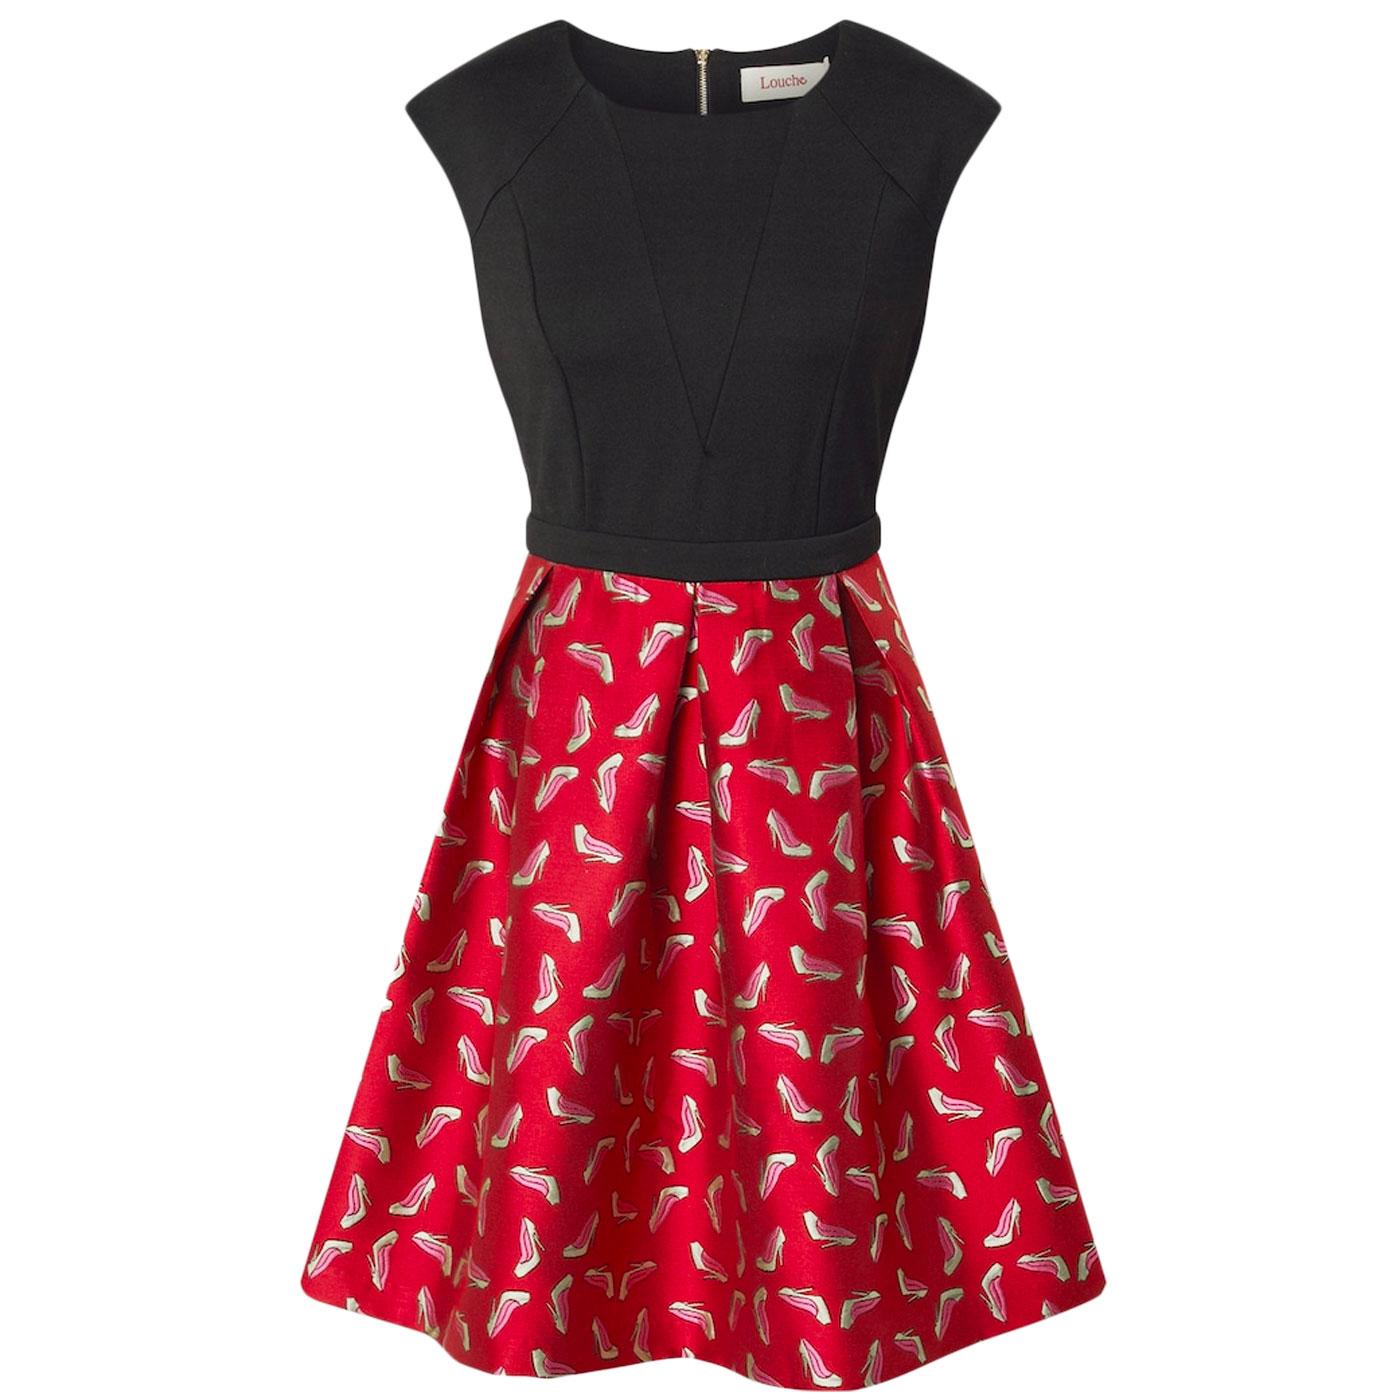 Meline LOUCHE LONDON Retro 50s Stiletto Dress RED